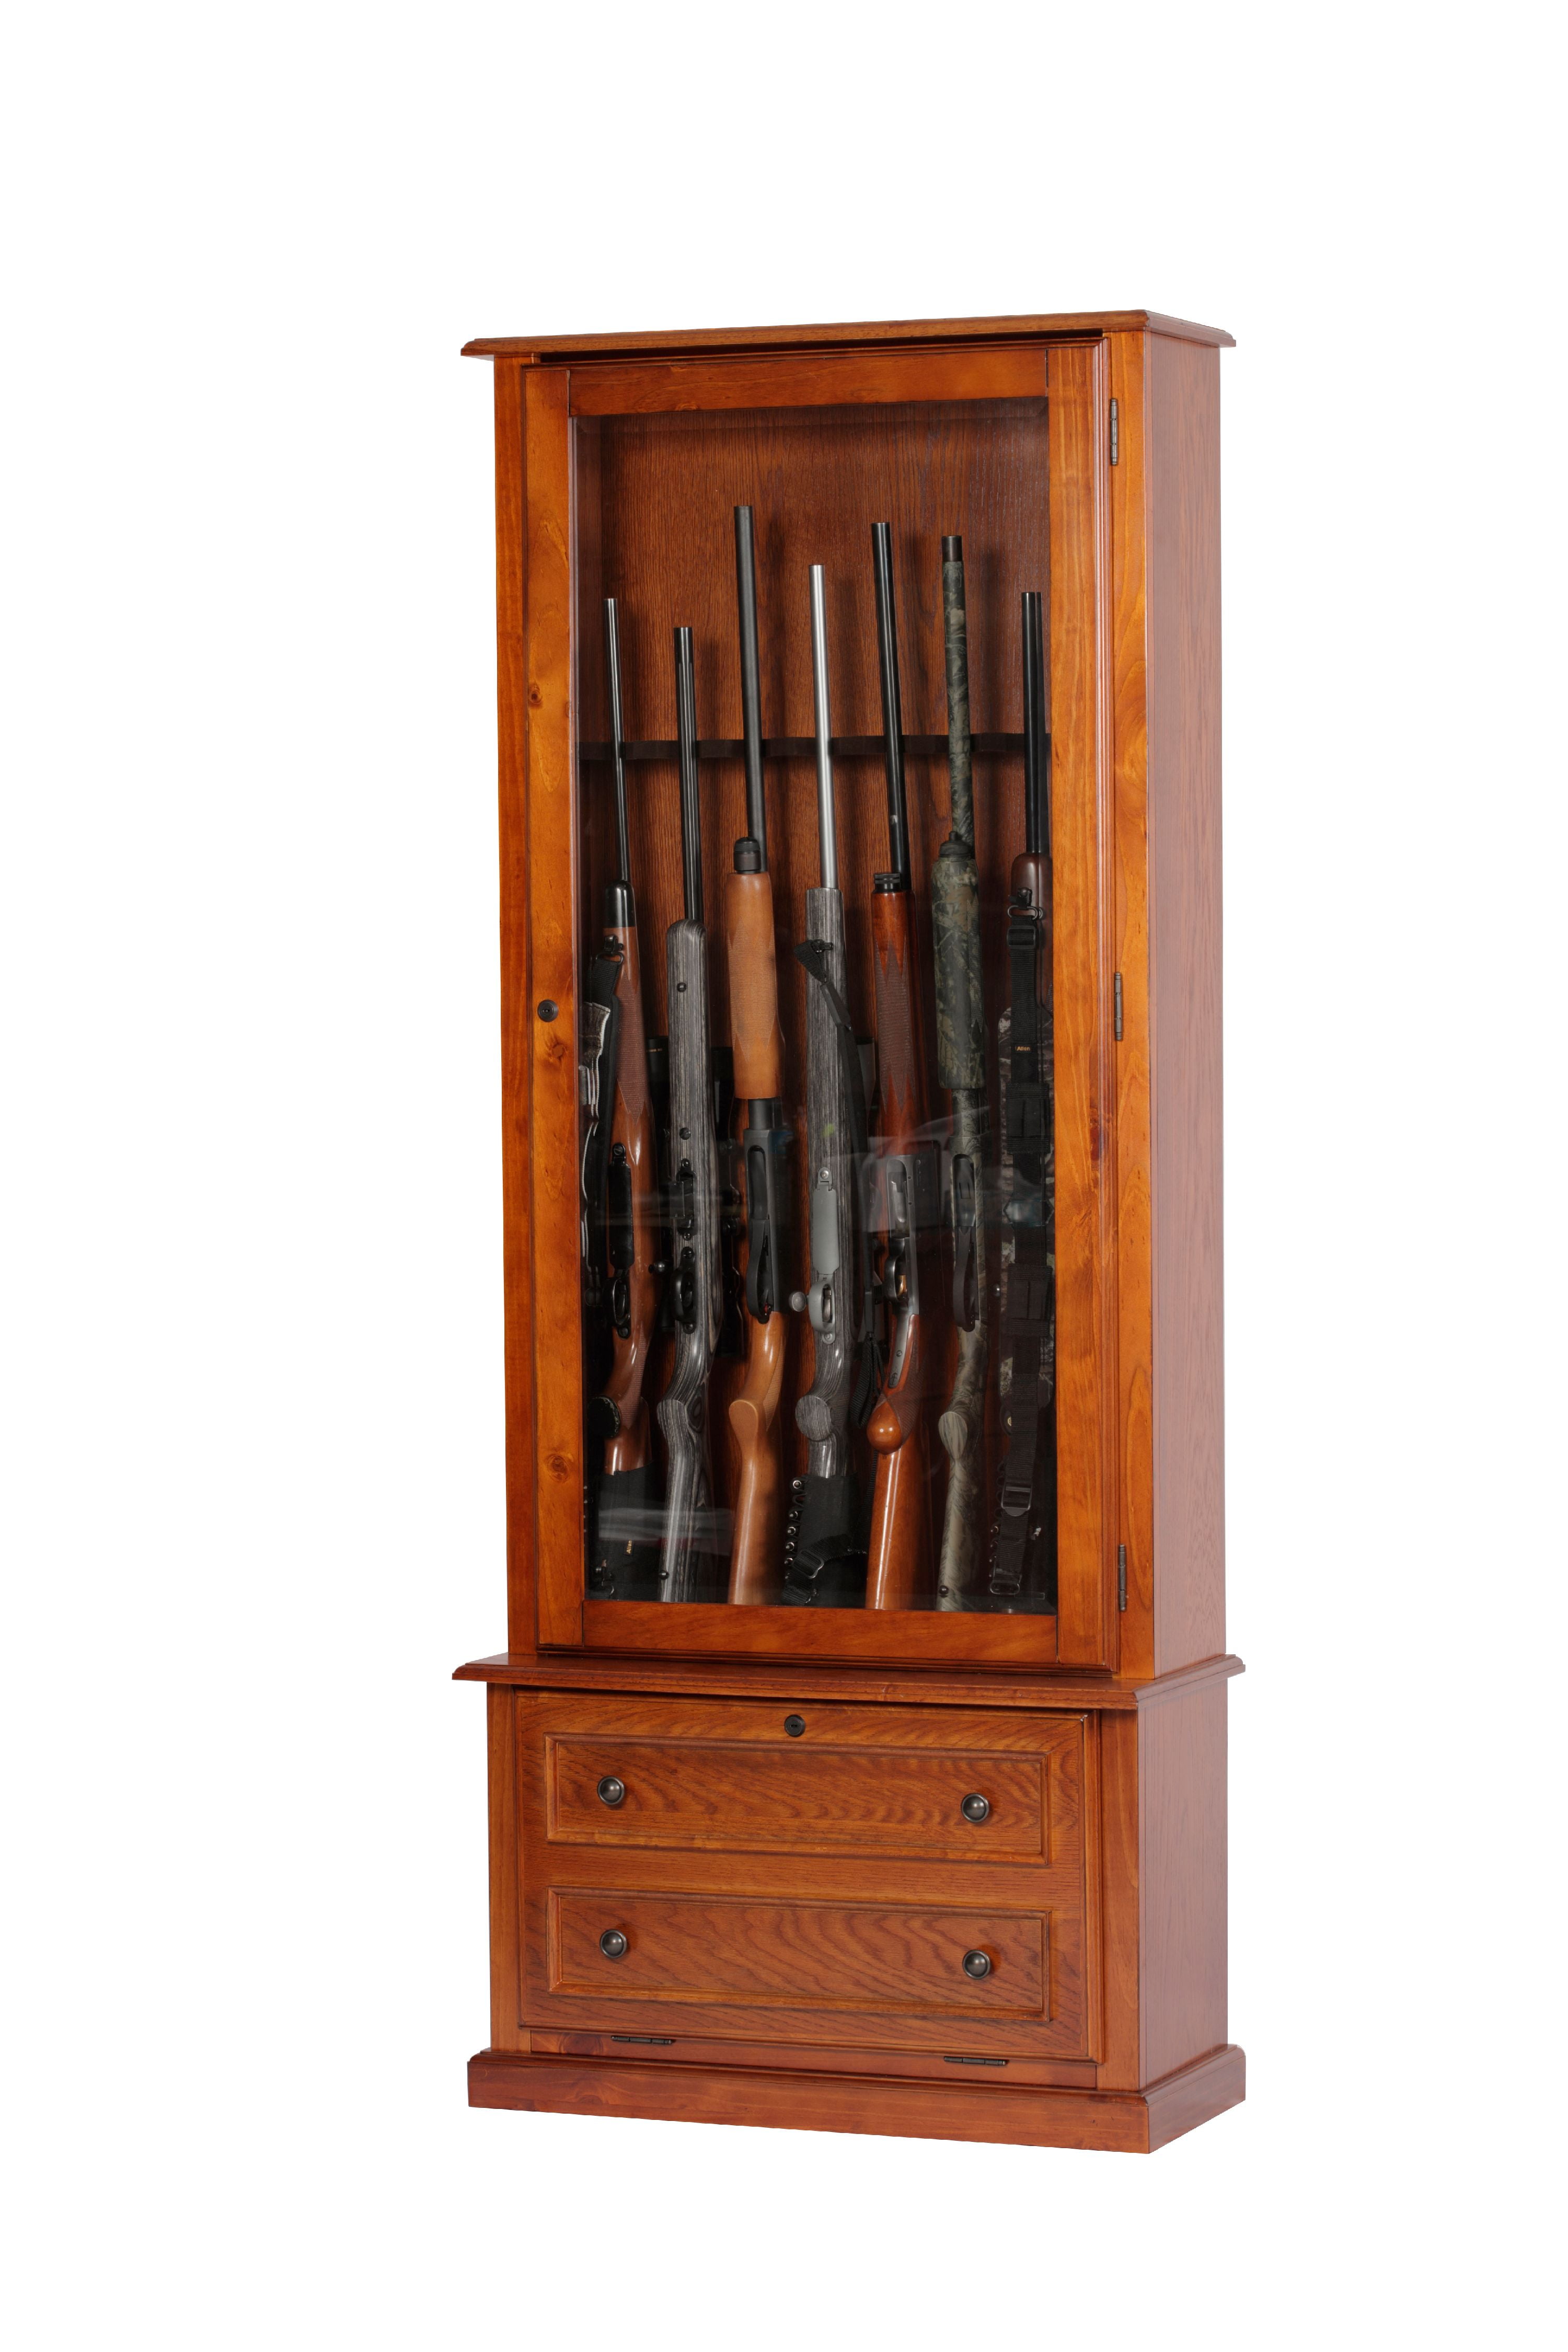 Concealment Gun Firearm SAFE CABINET STORAGE WOOD BENCH American Home Furniture 